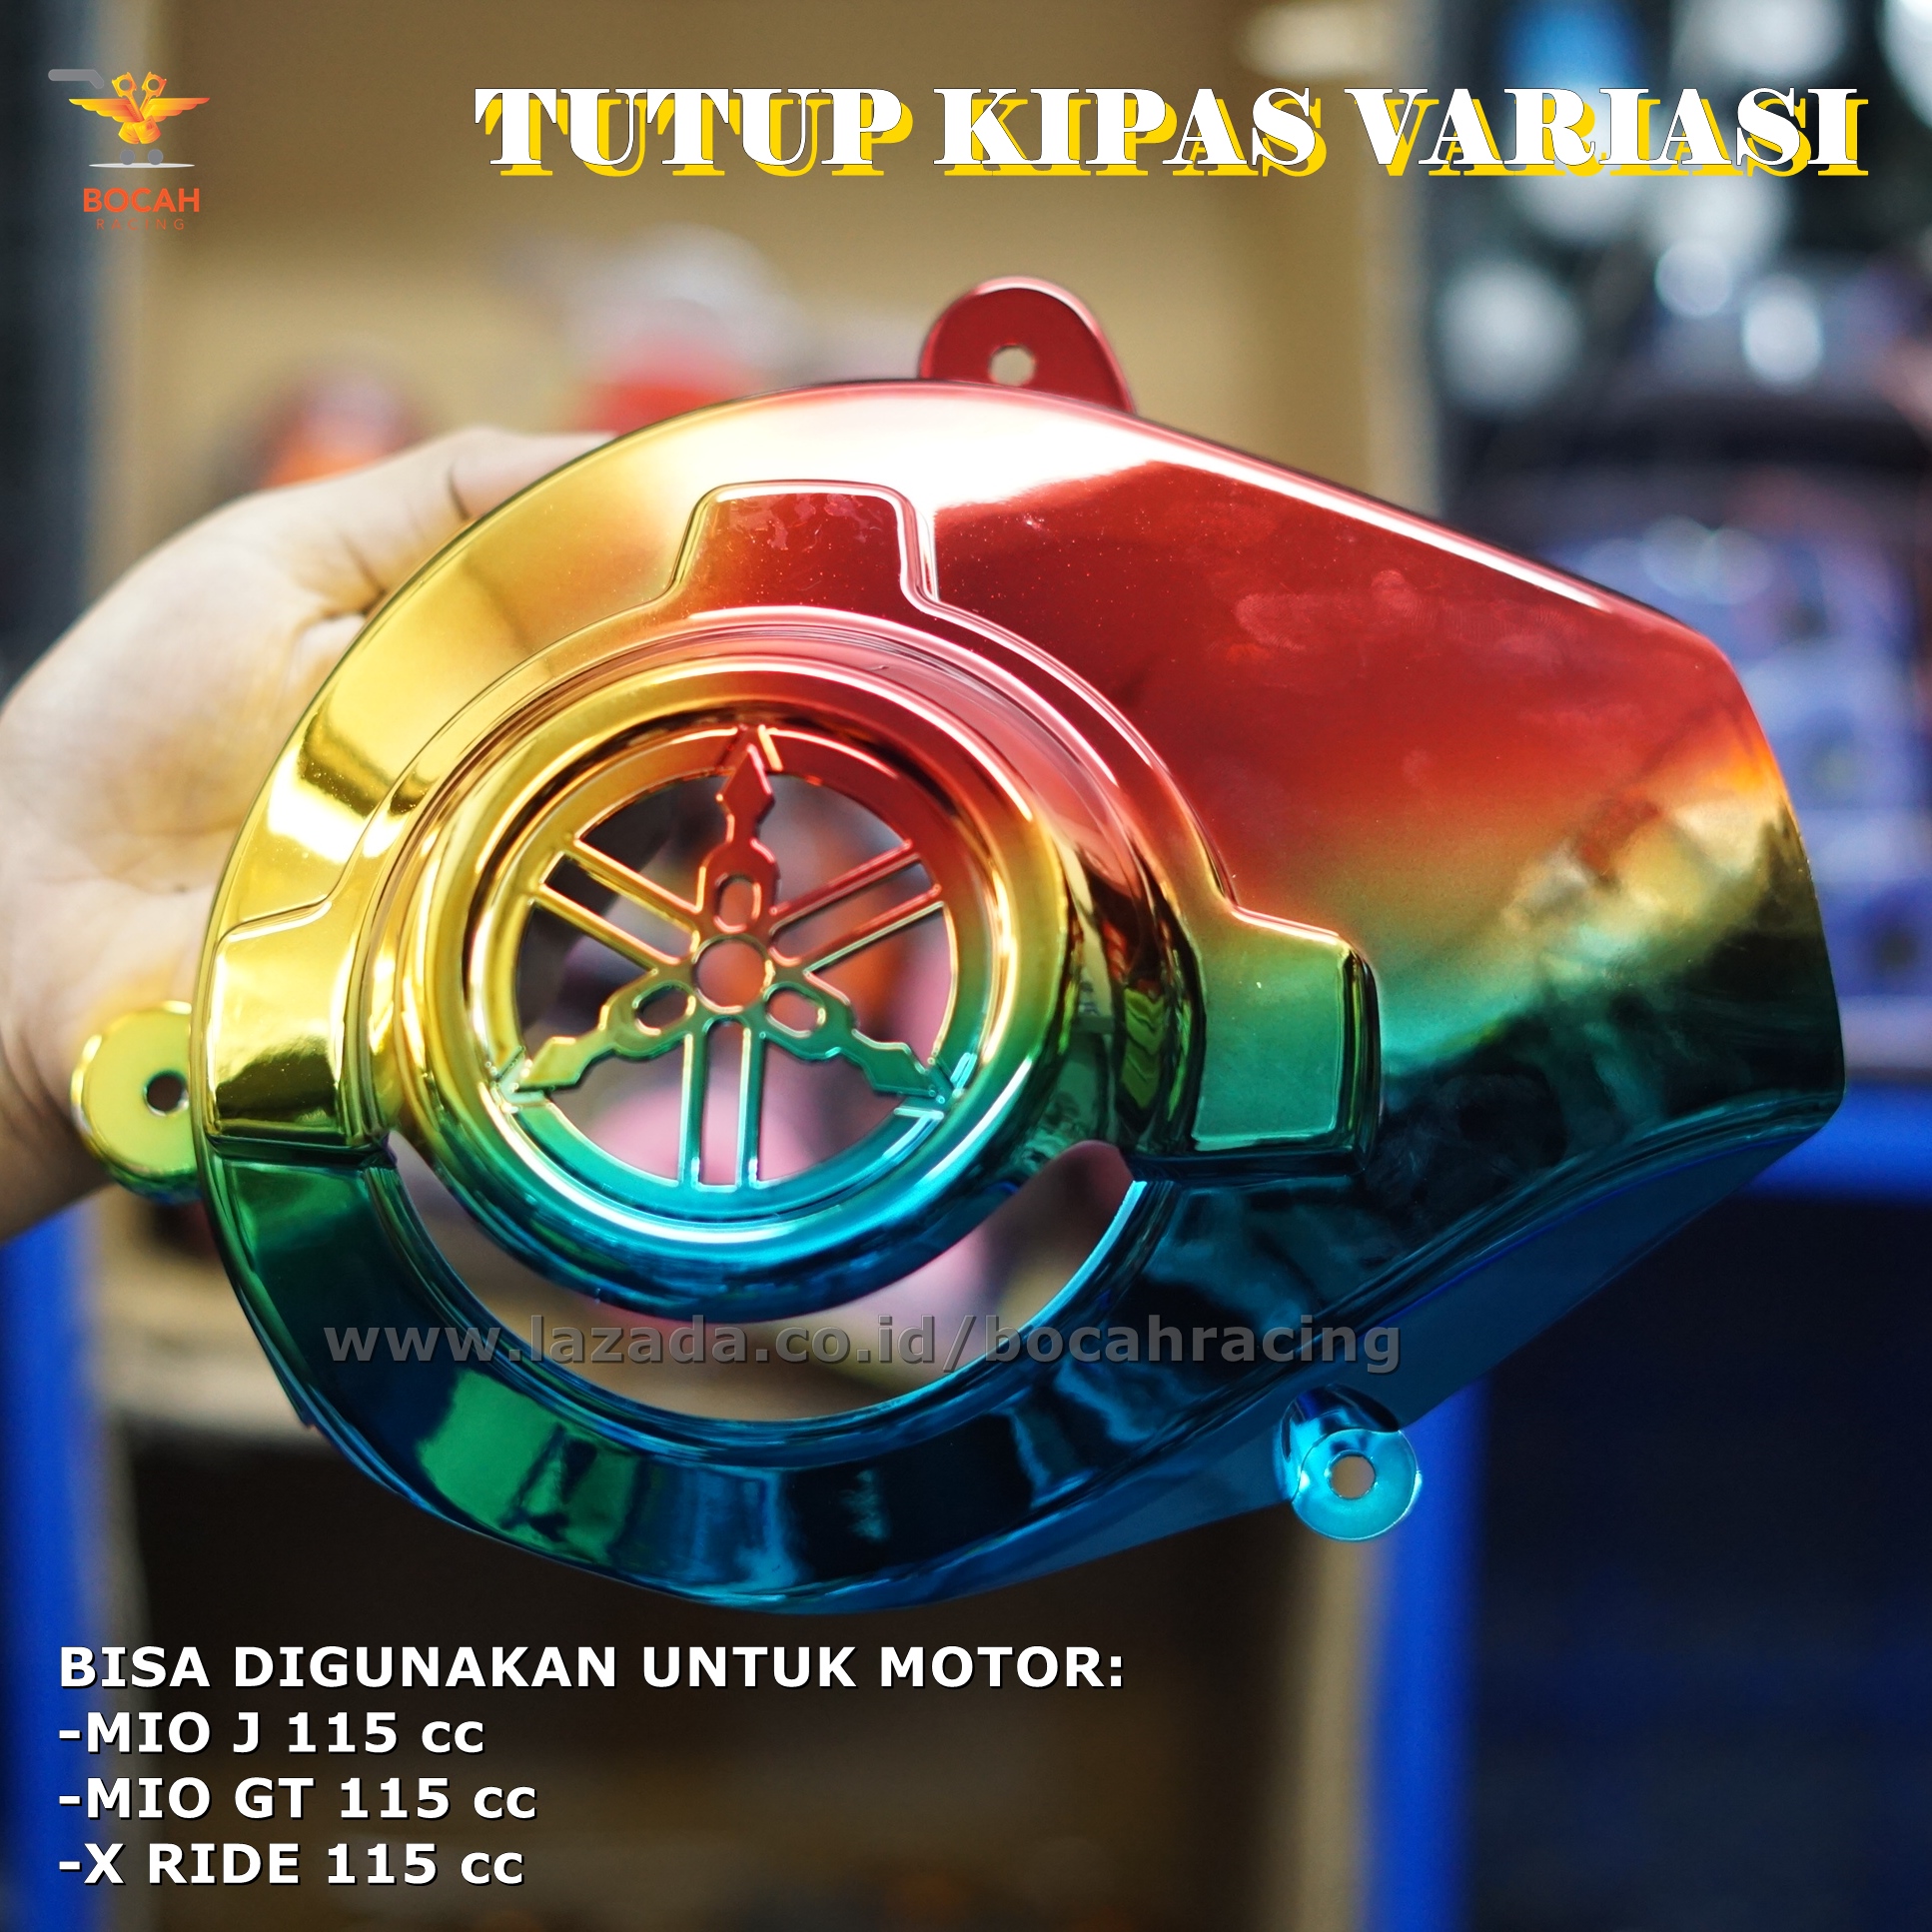 BOCAHRACING Tutup Kipas Mio J Mio Gt 115cc Xride 115cc Variasi Modifikasi Warna Pelangi Lazada Indonesia